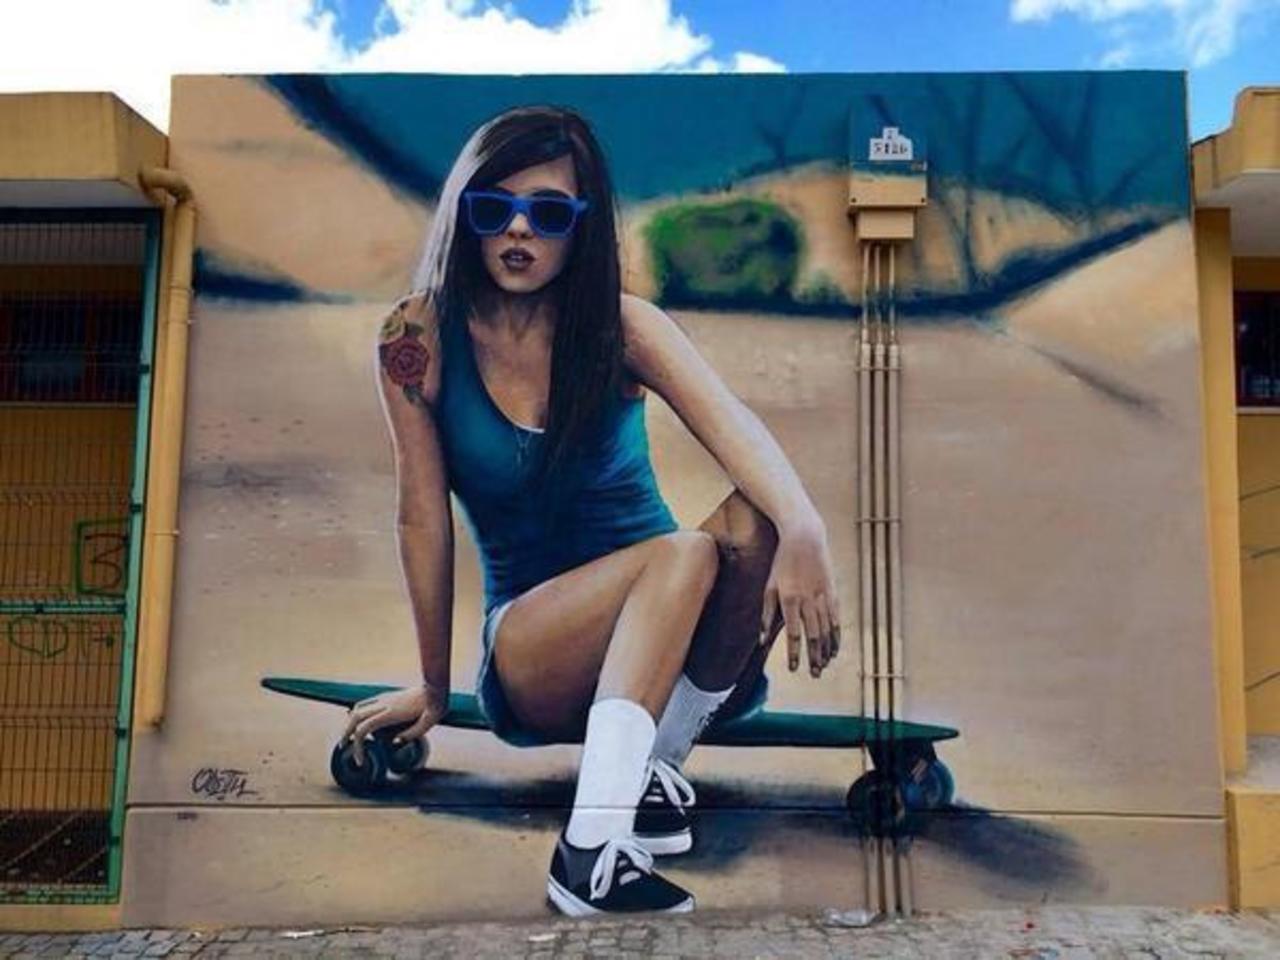 #streetart by #odeith in #portugal #switch #bedifferent #graffiti #arte #art http://t.co/SmzsKVUcDy